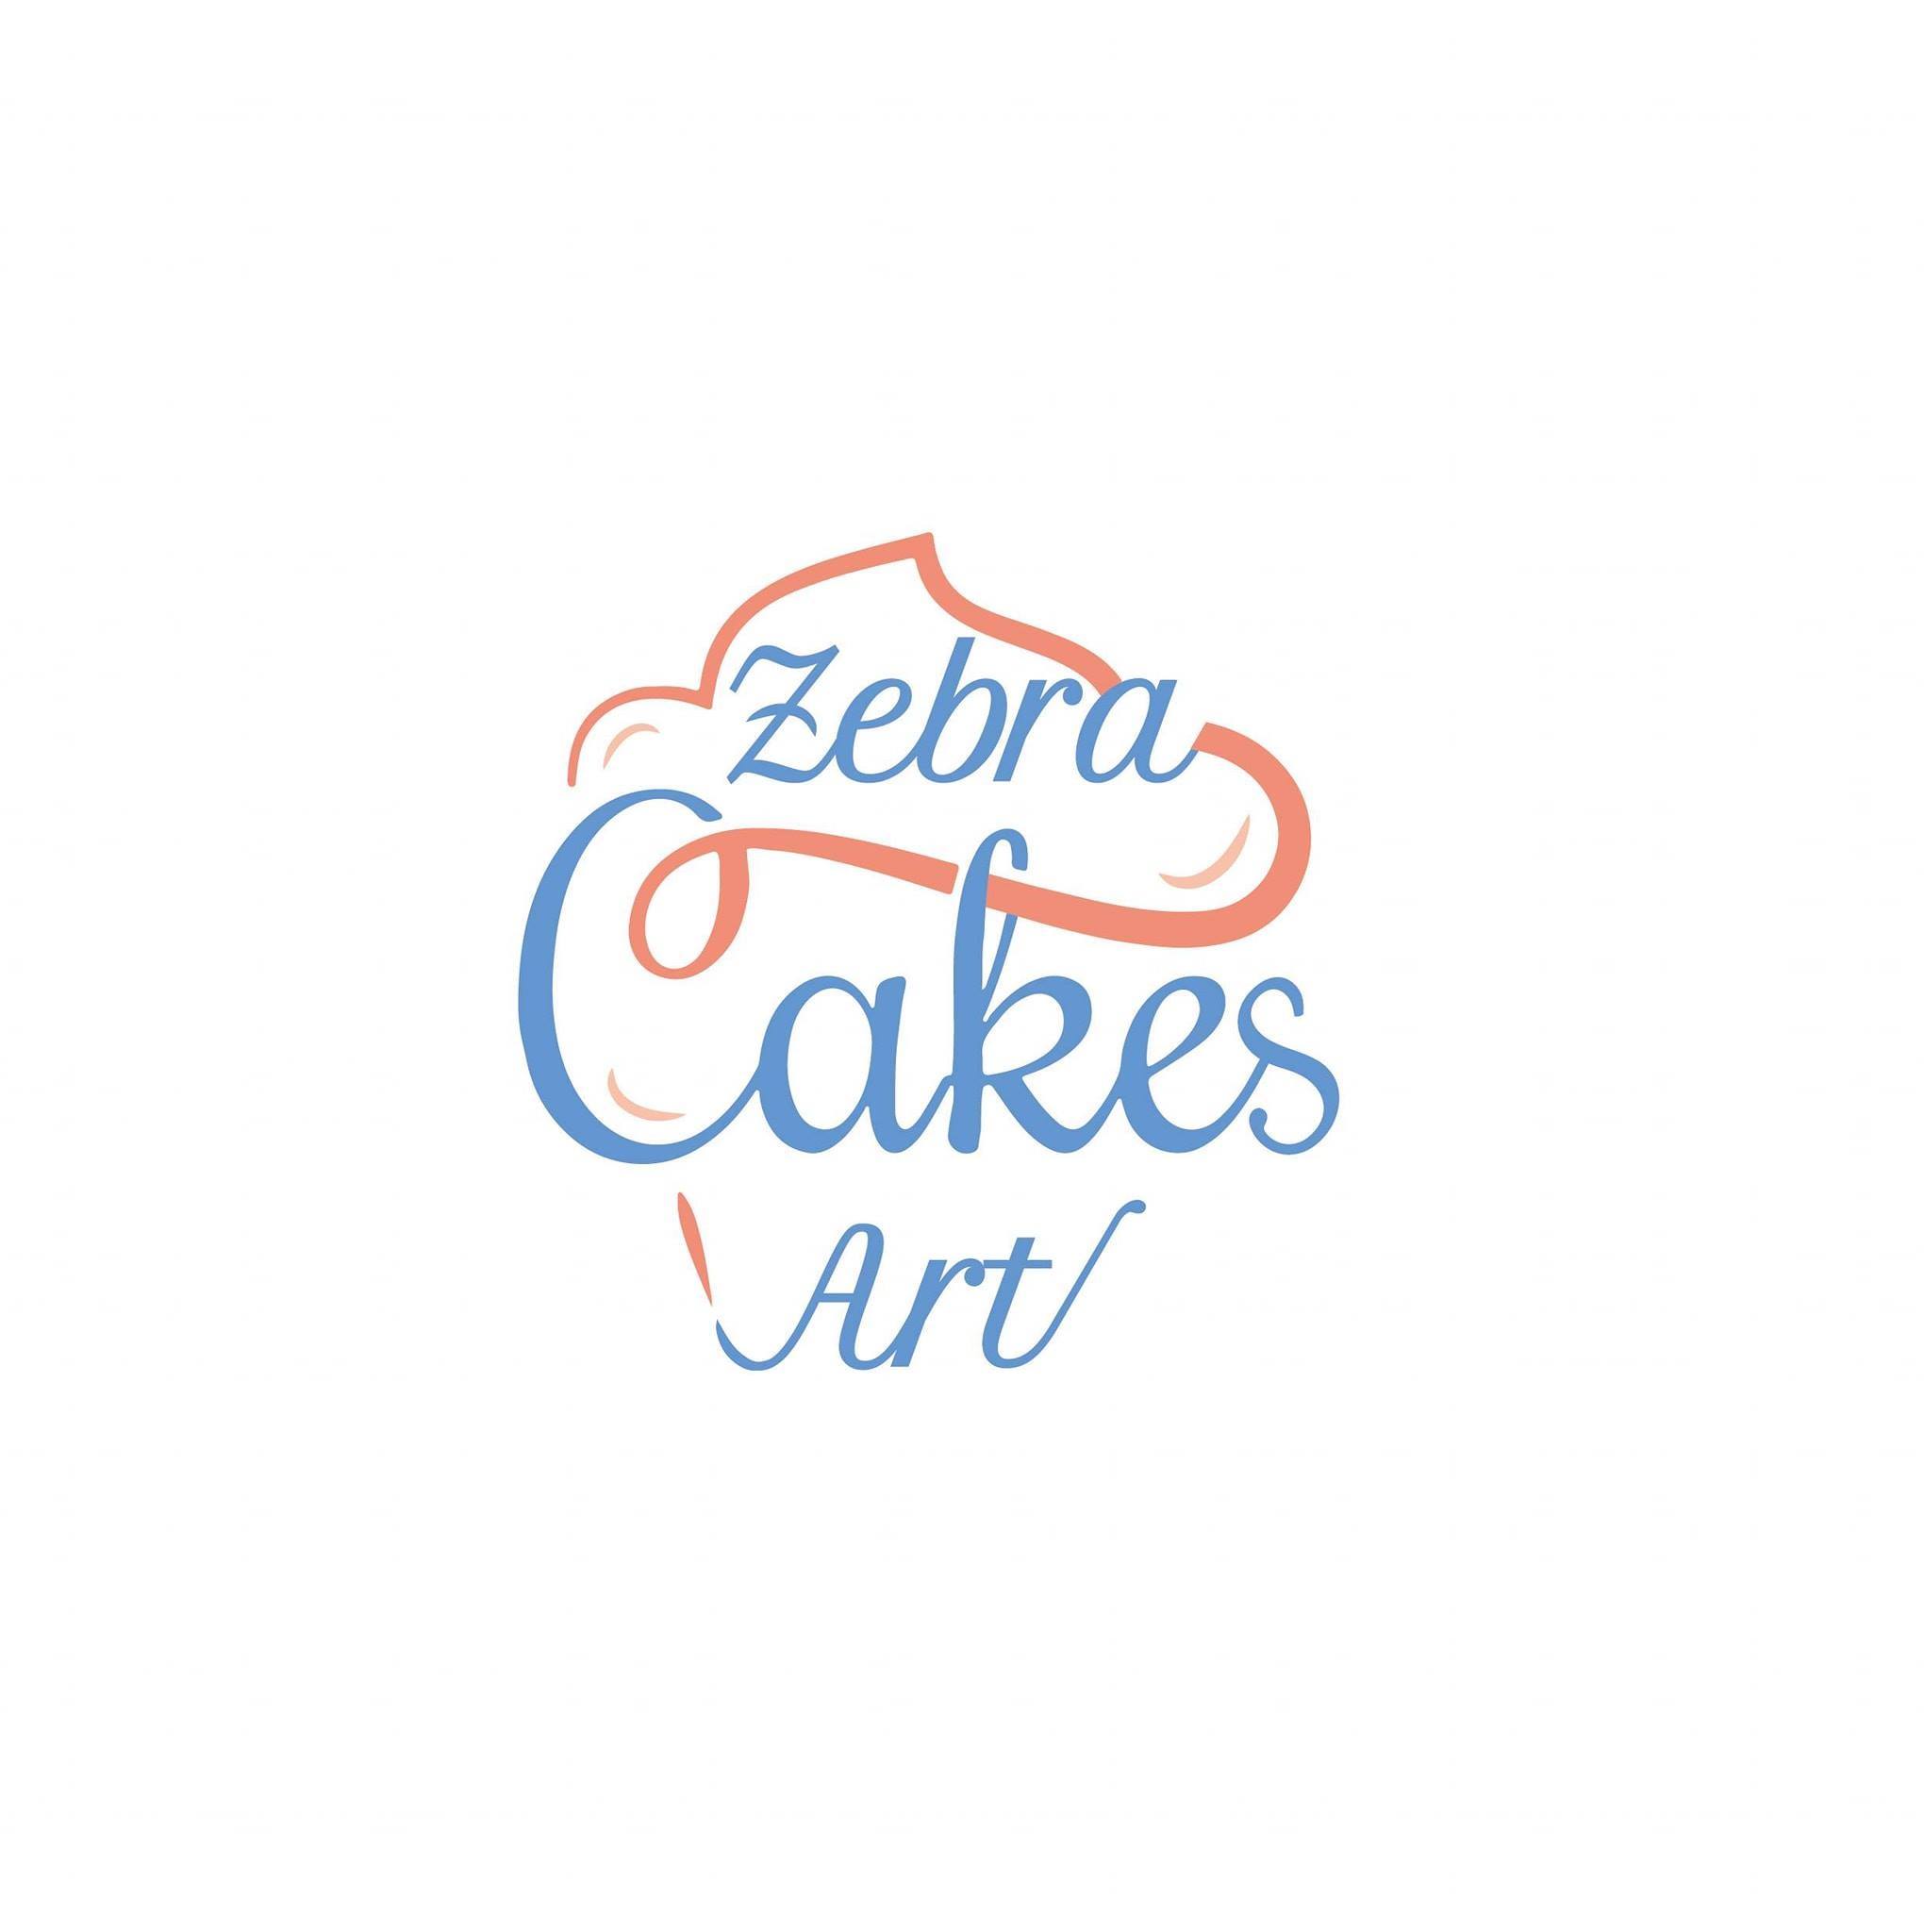 ZEBRA CAKES ART